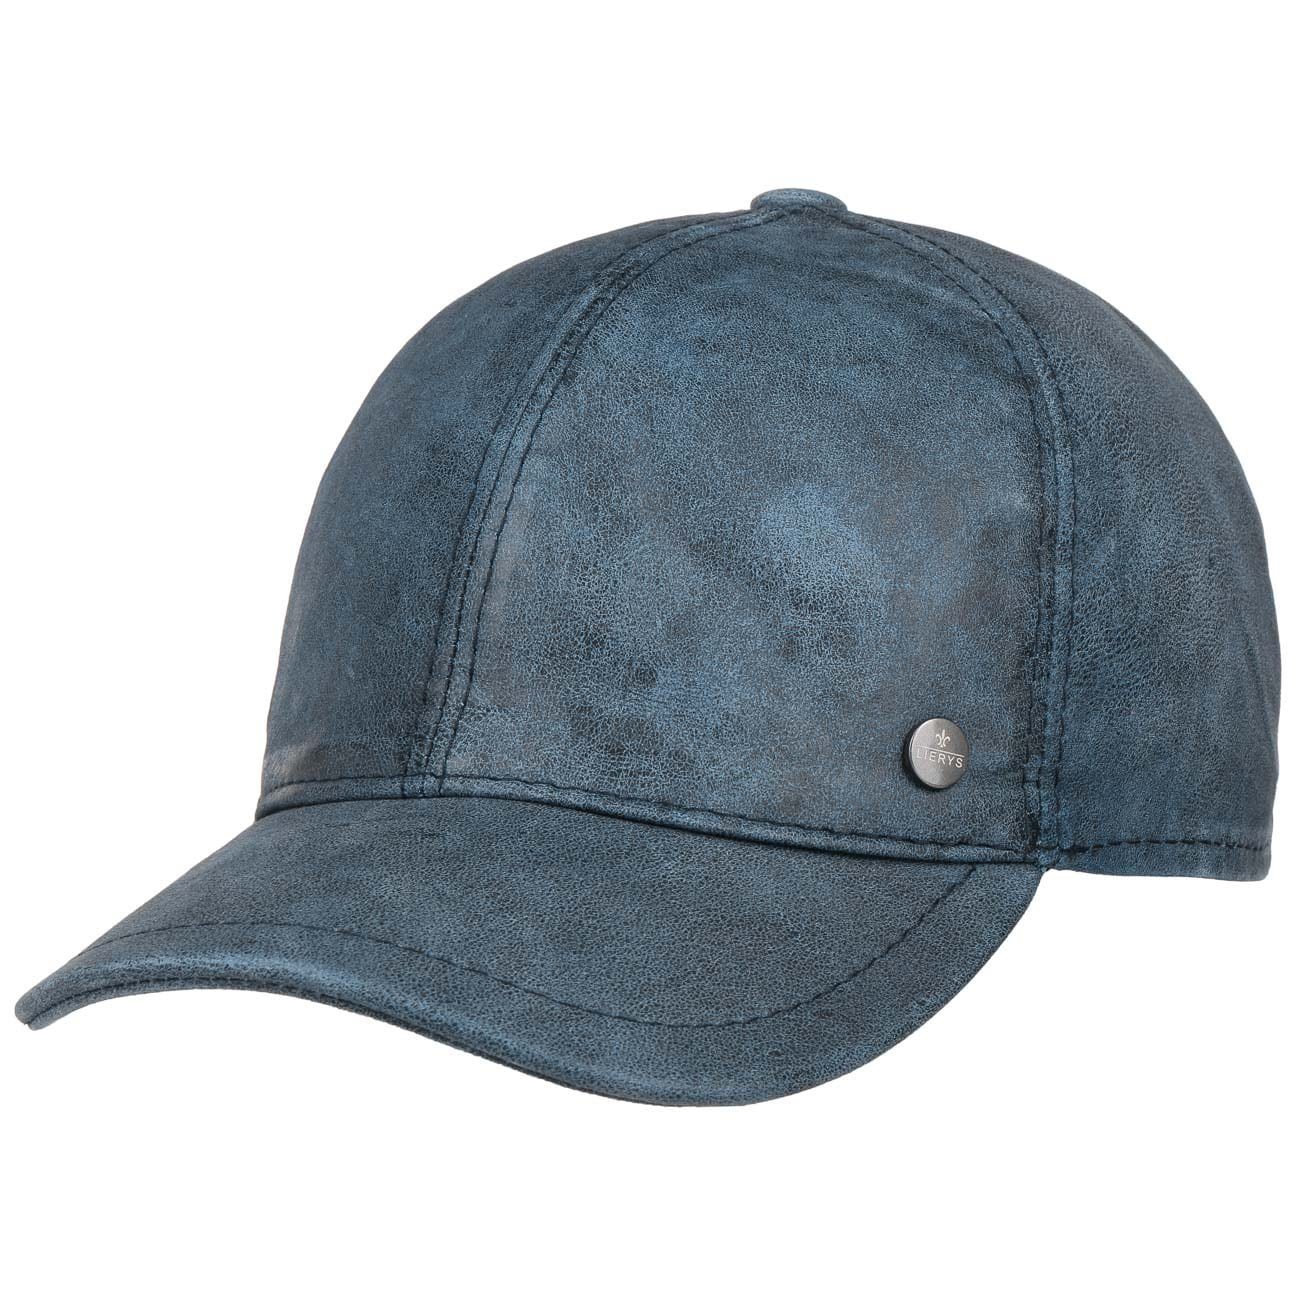 Lierys Baseball Cap (1-St) Baseballcap mit Schirm, Made in Italy blau